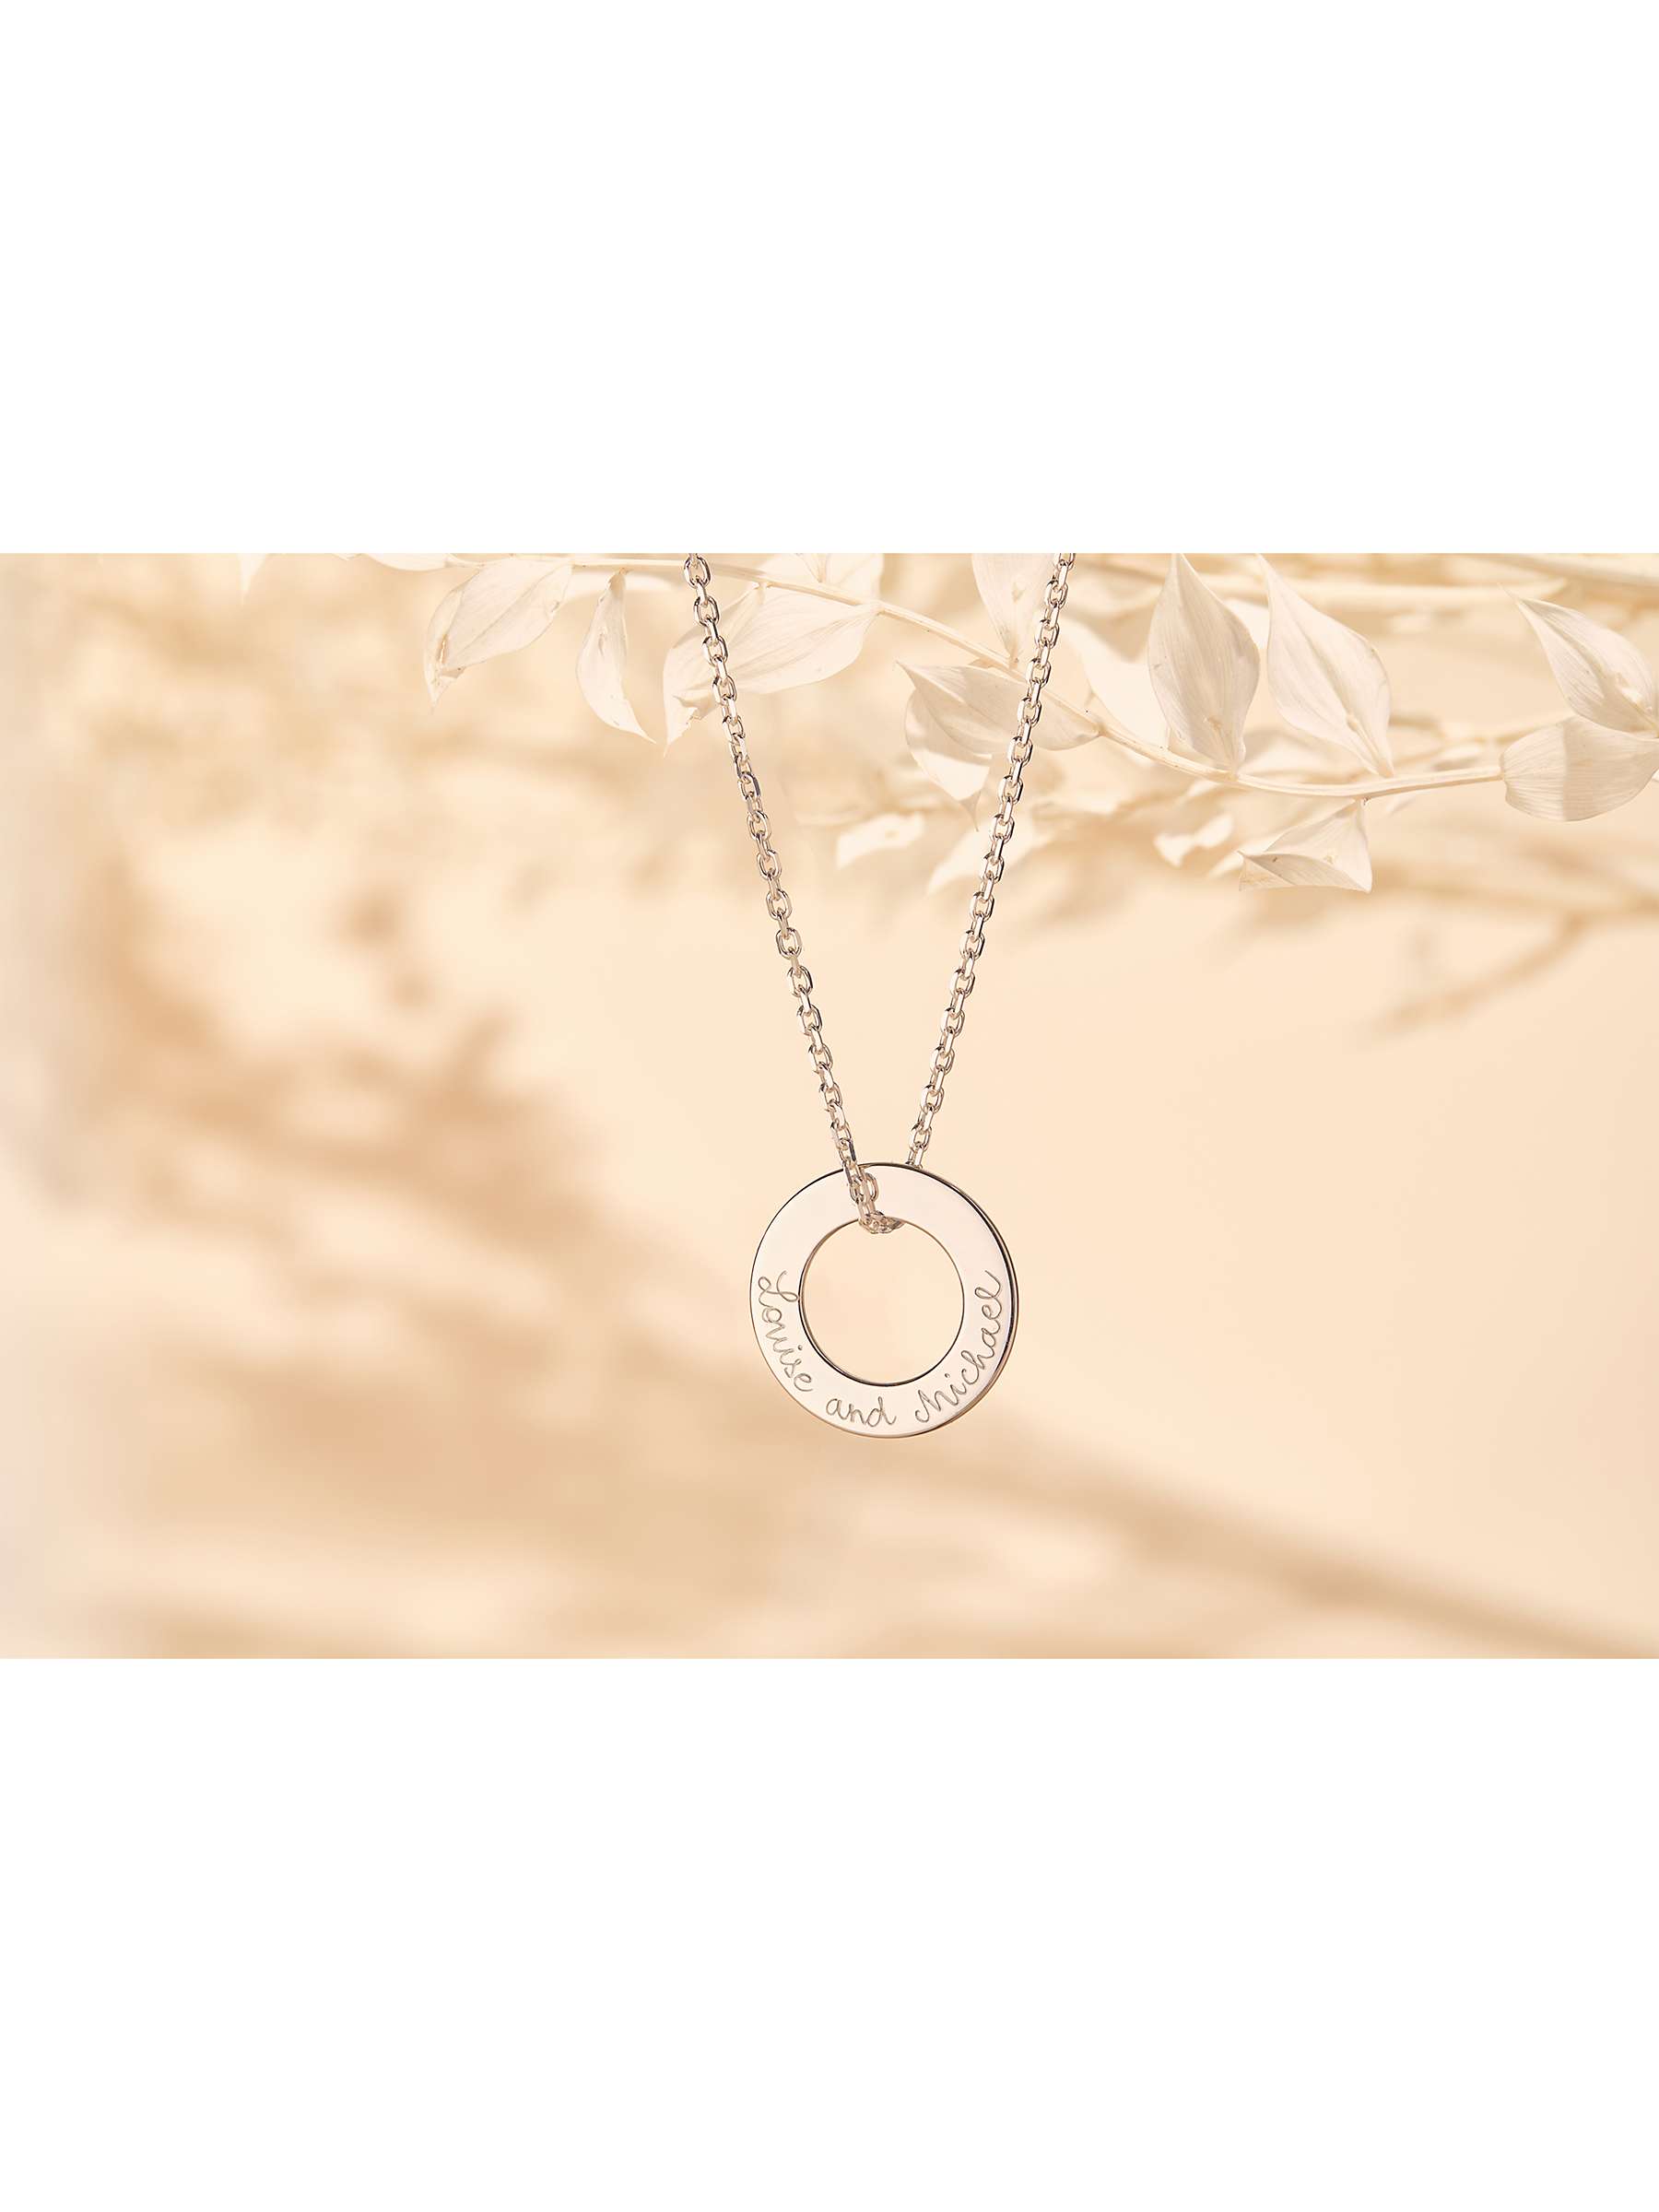 Buy Merci Maman Personalised Eternity Pendant Necklace Online at johnlewis.com